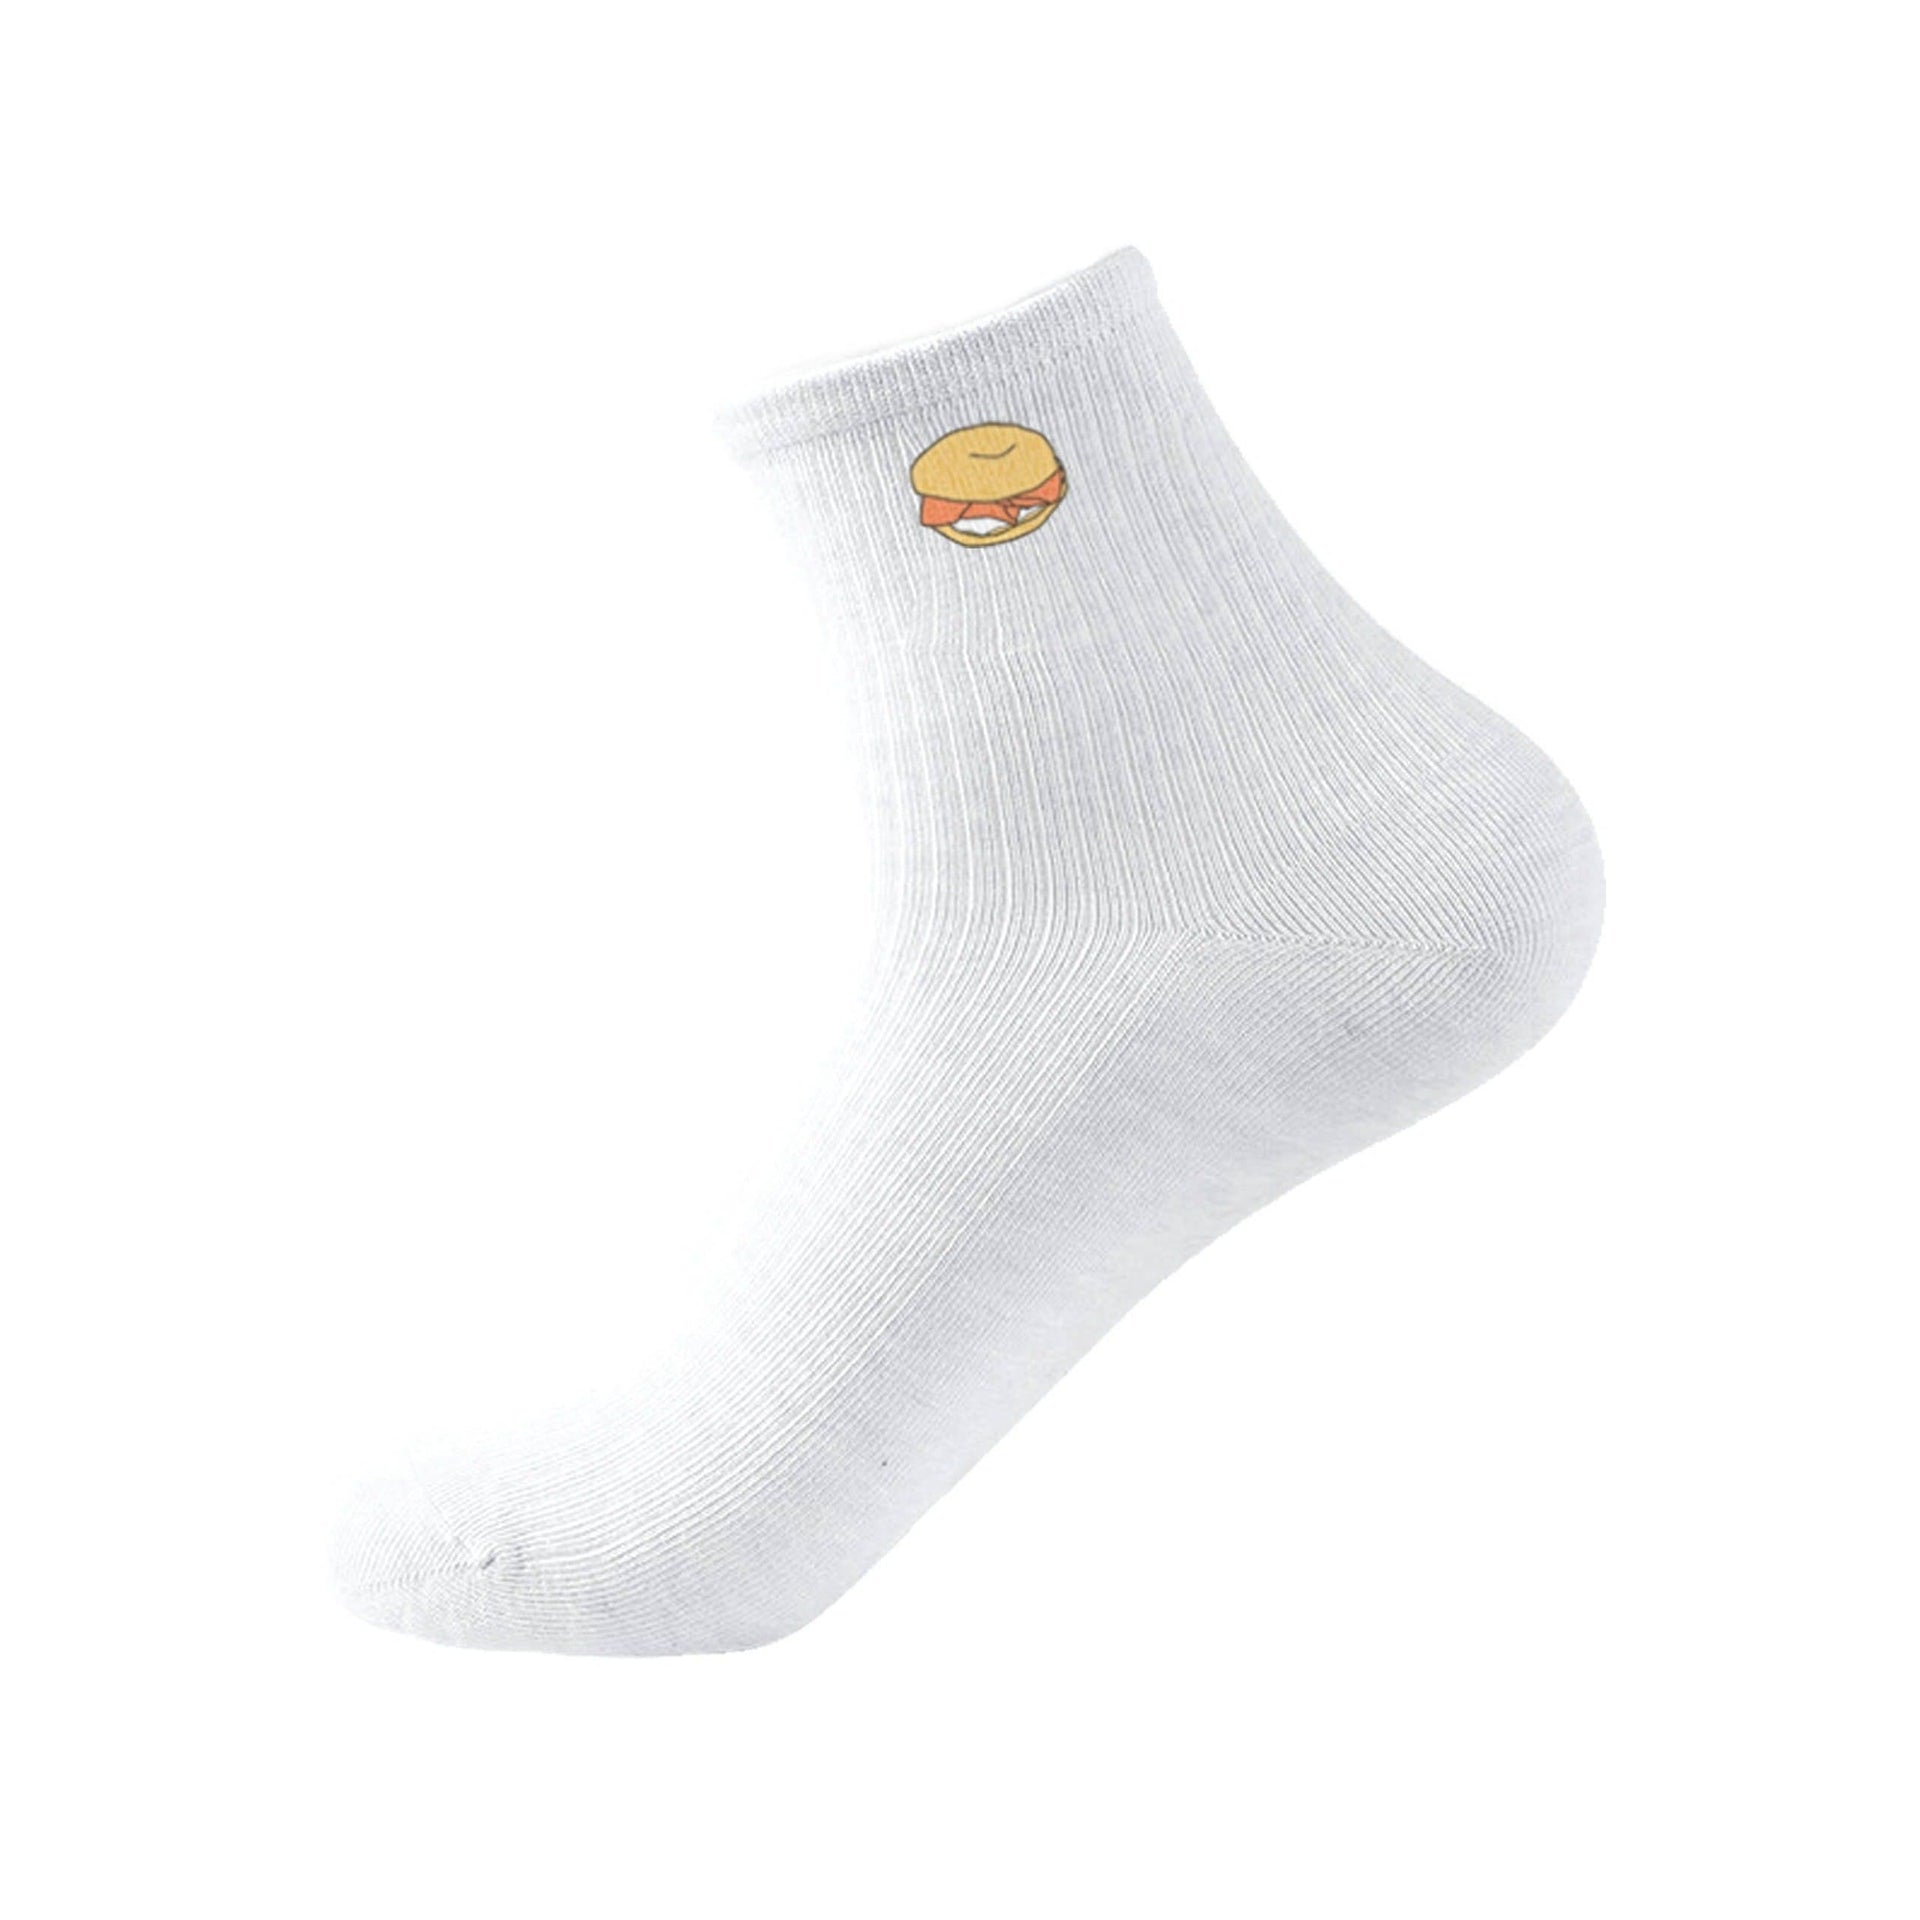 Drawn Goods Socks White / One Size Bagel Tennis Socks